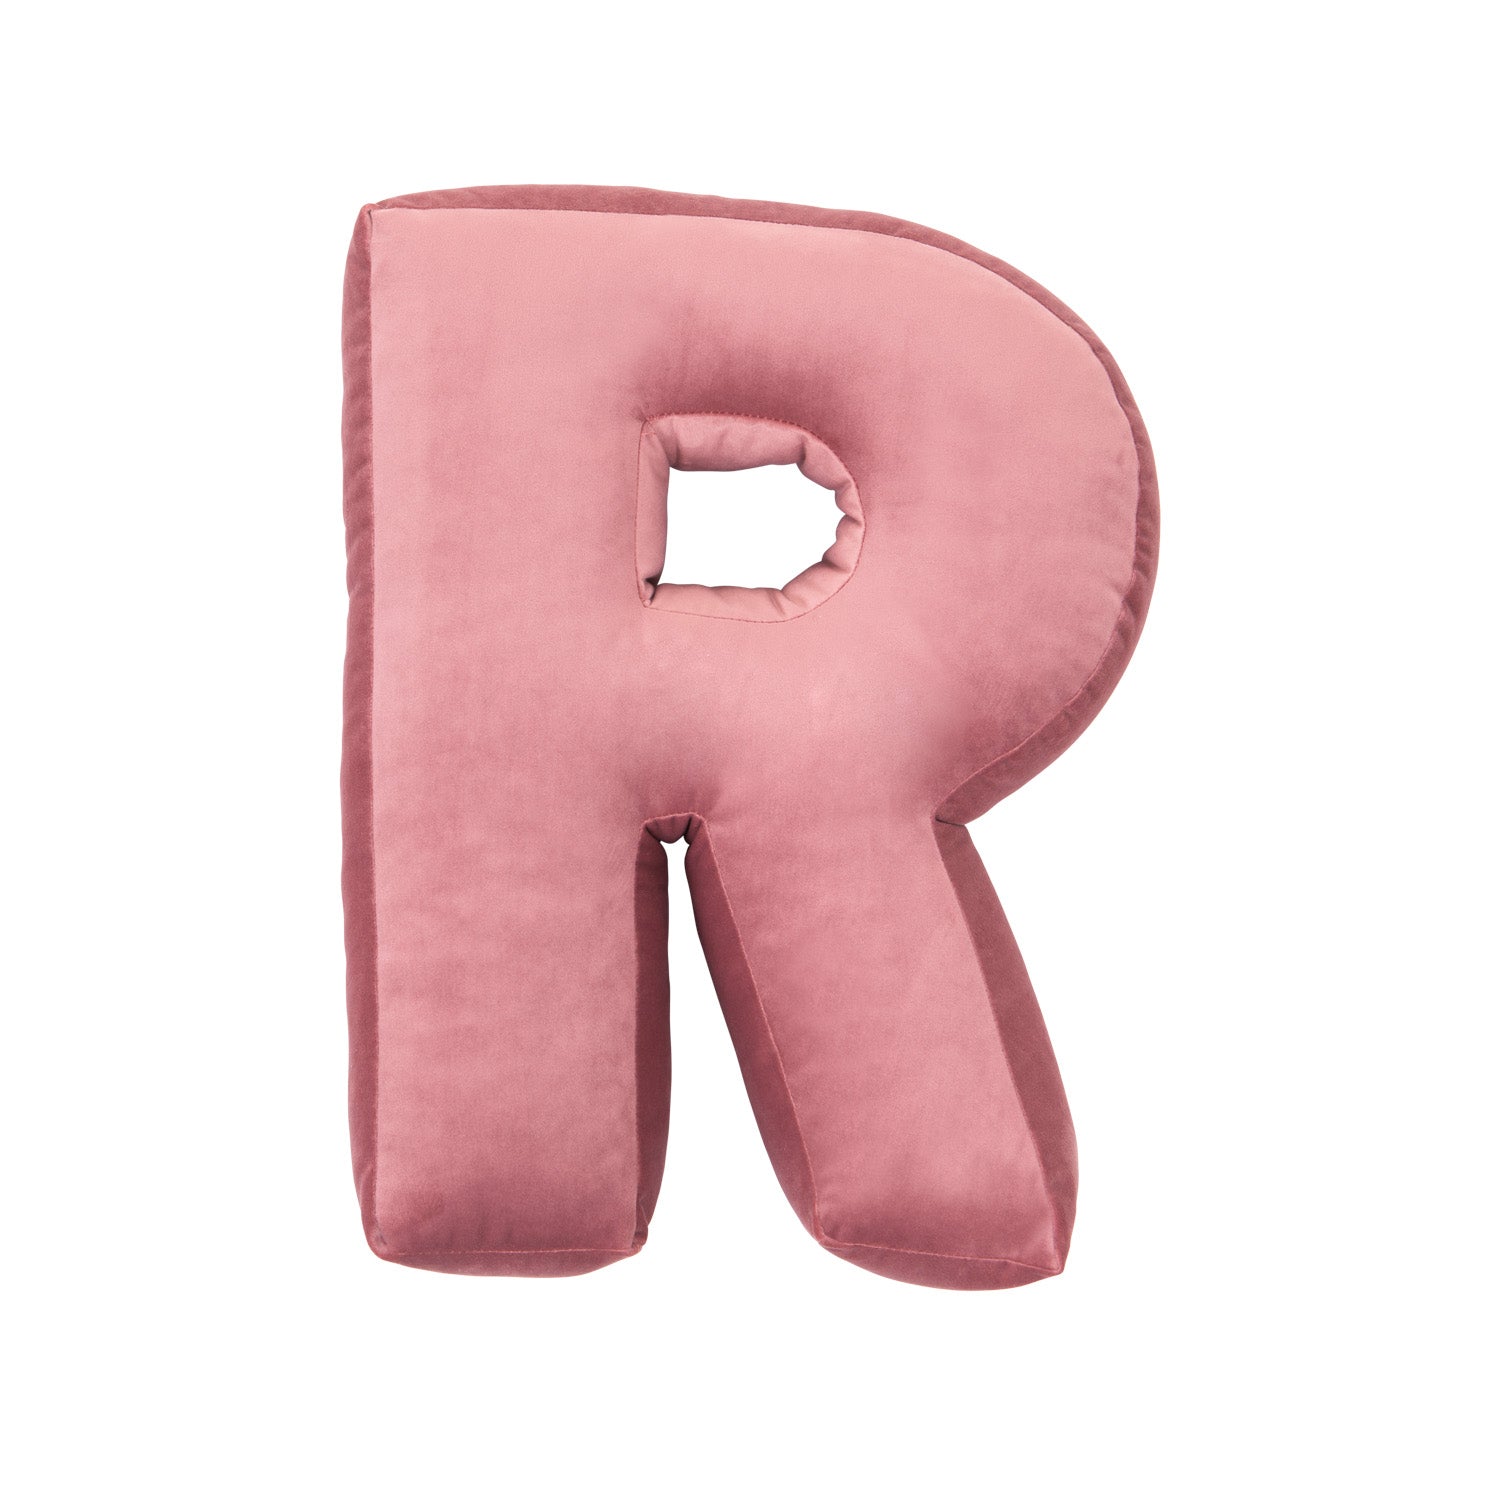 Poduszka literka welurowa R różowa od Bettys Home